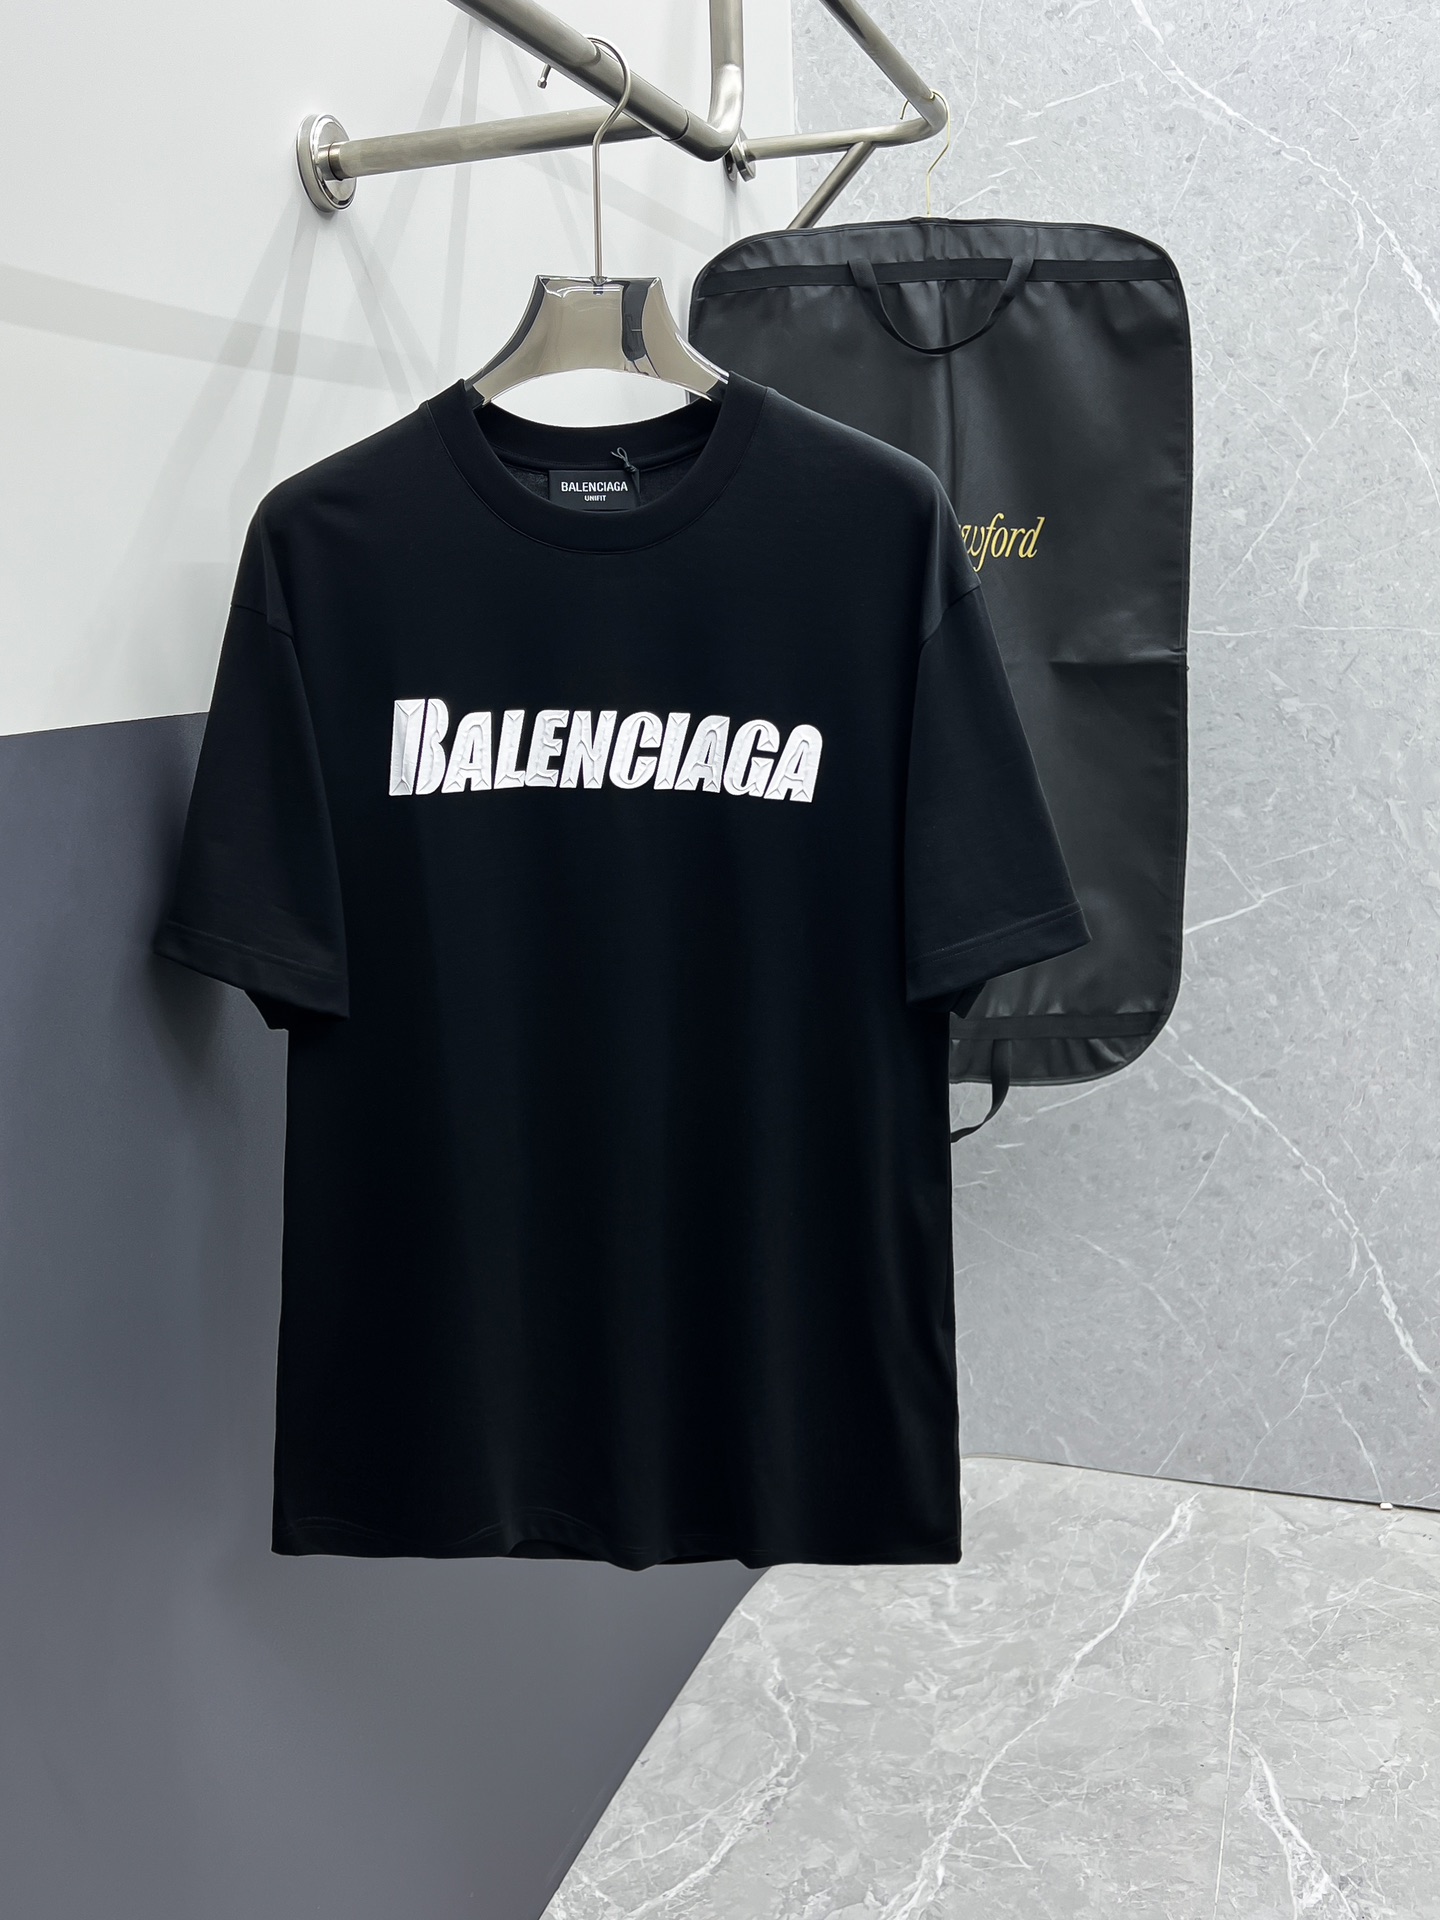 Balenciaga High
 Clothing T-Shirt Black White Unisex Cotton Spring/Summer Collection Fashion Short Sleeve